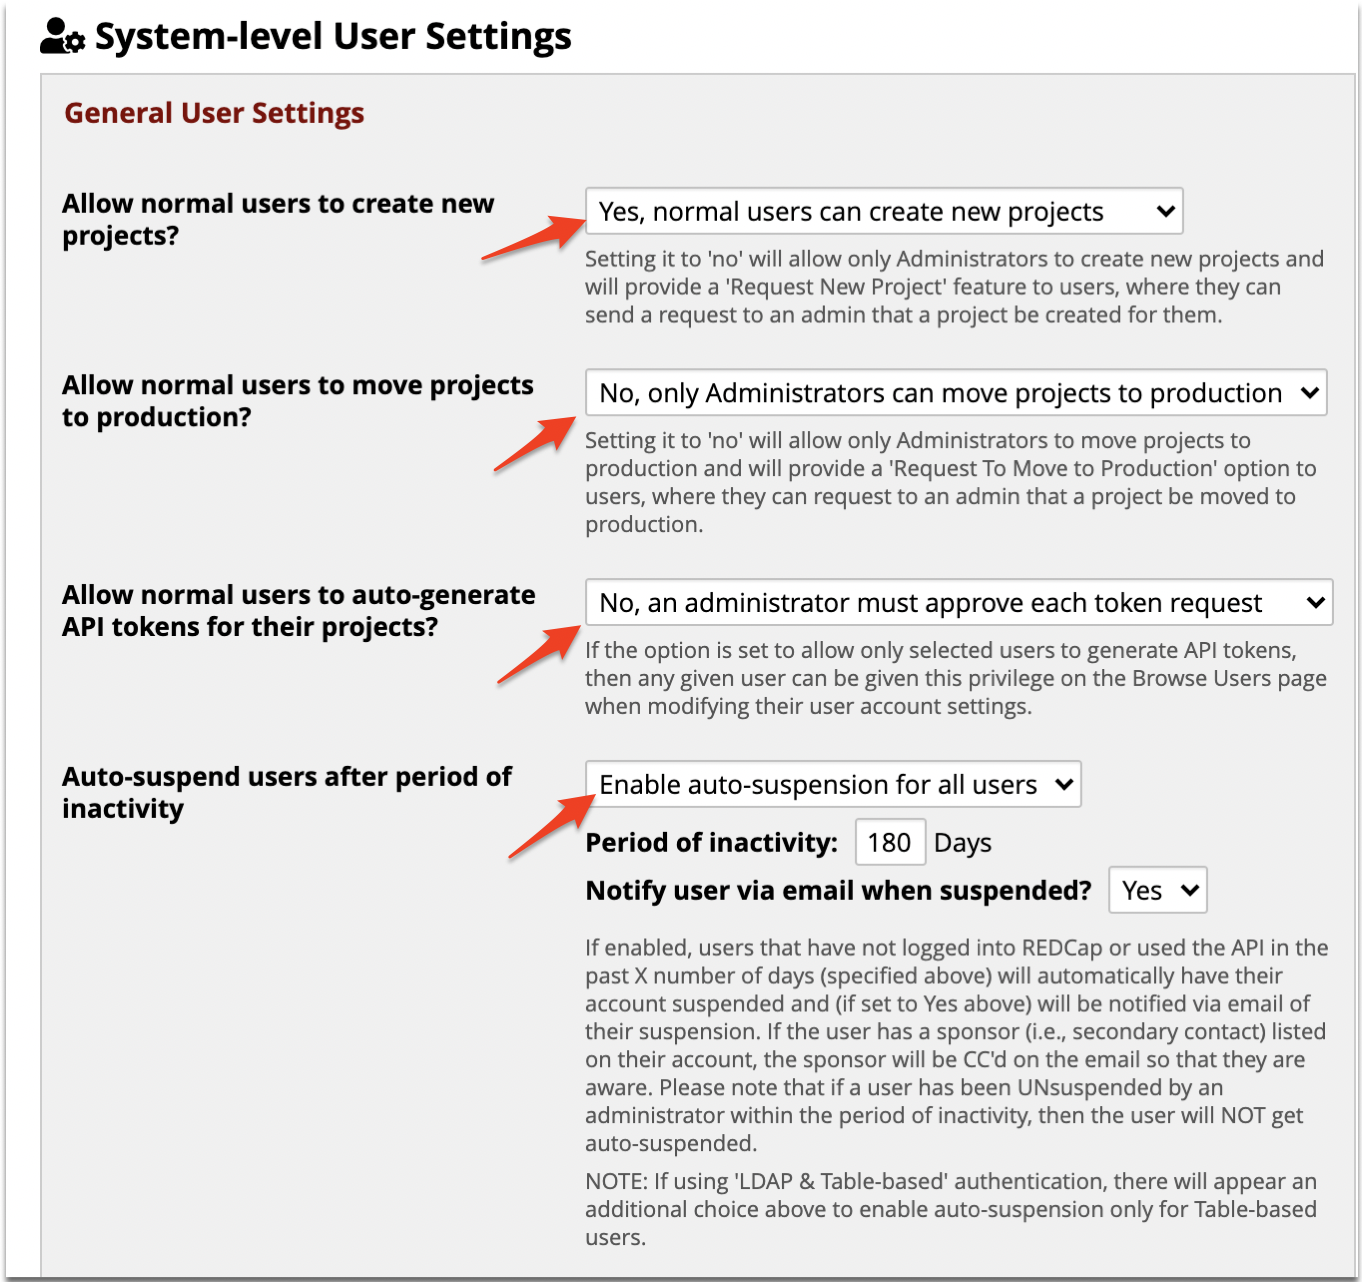 User Settings System-Level 1 of 2